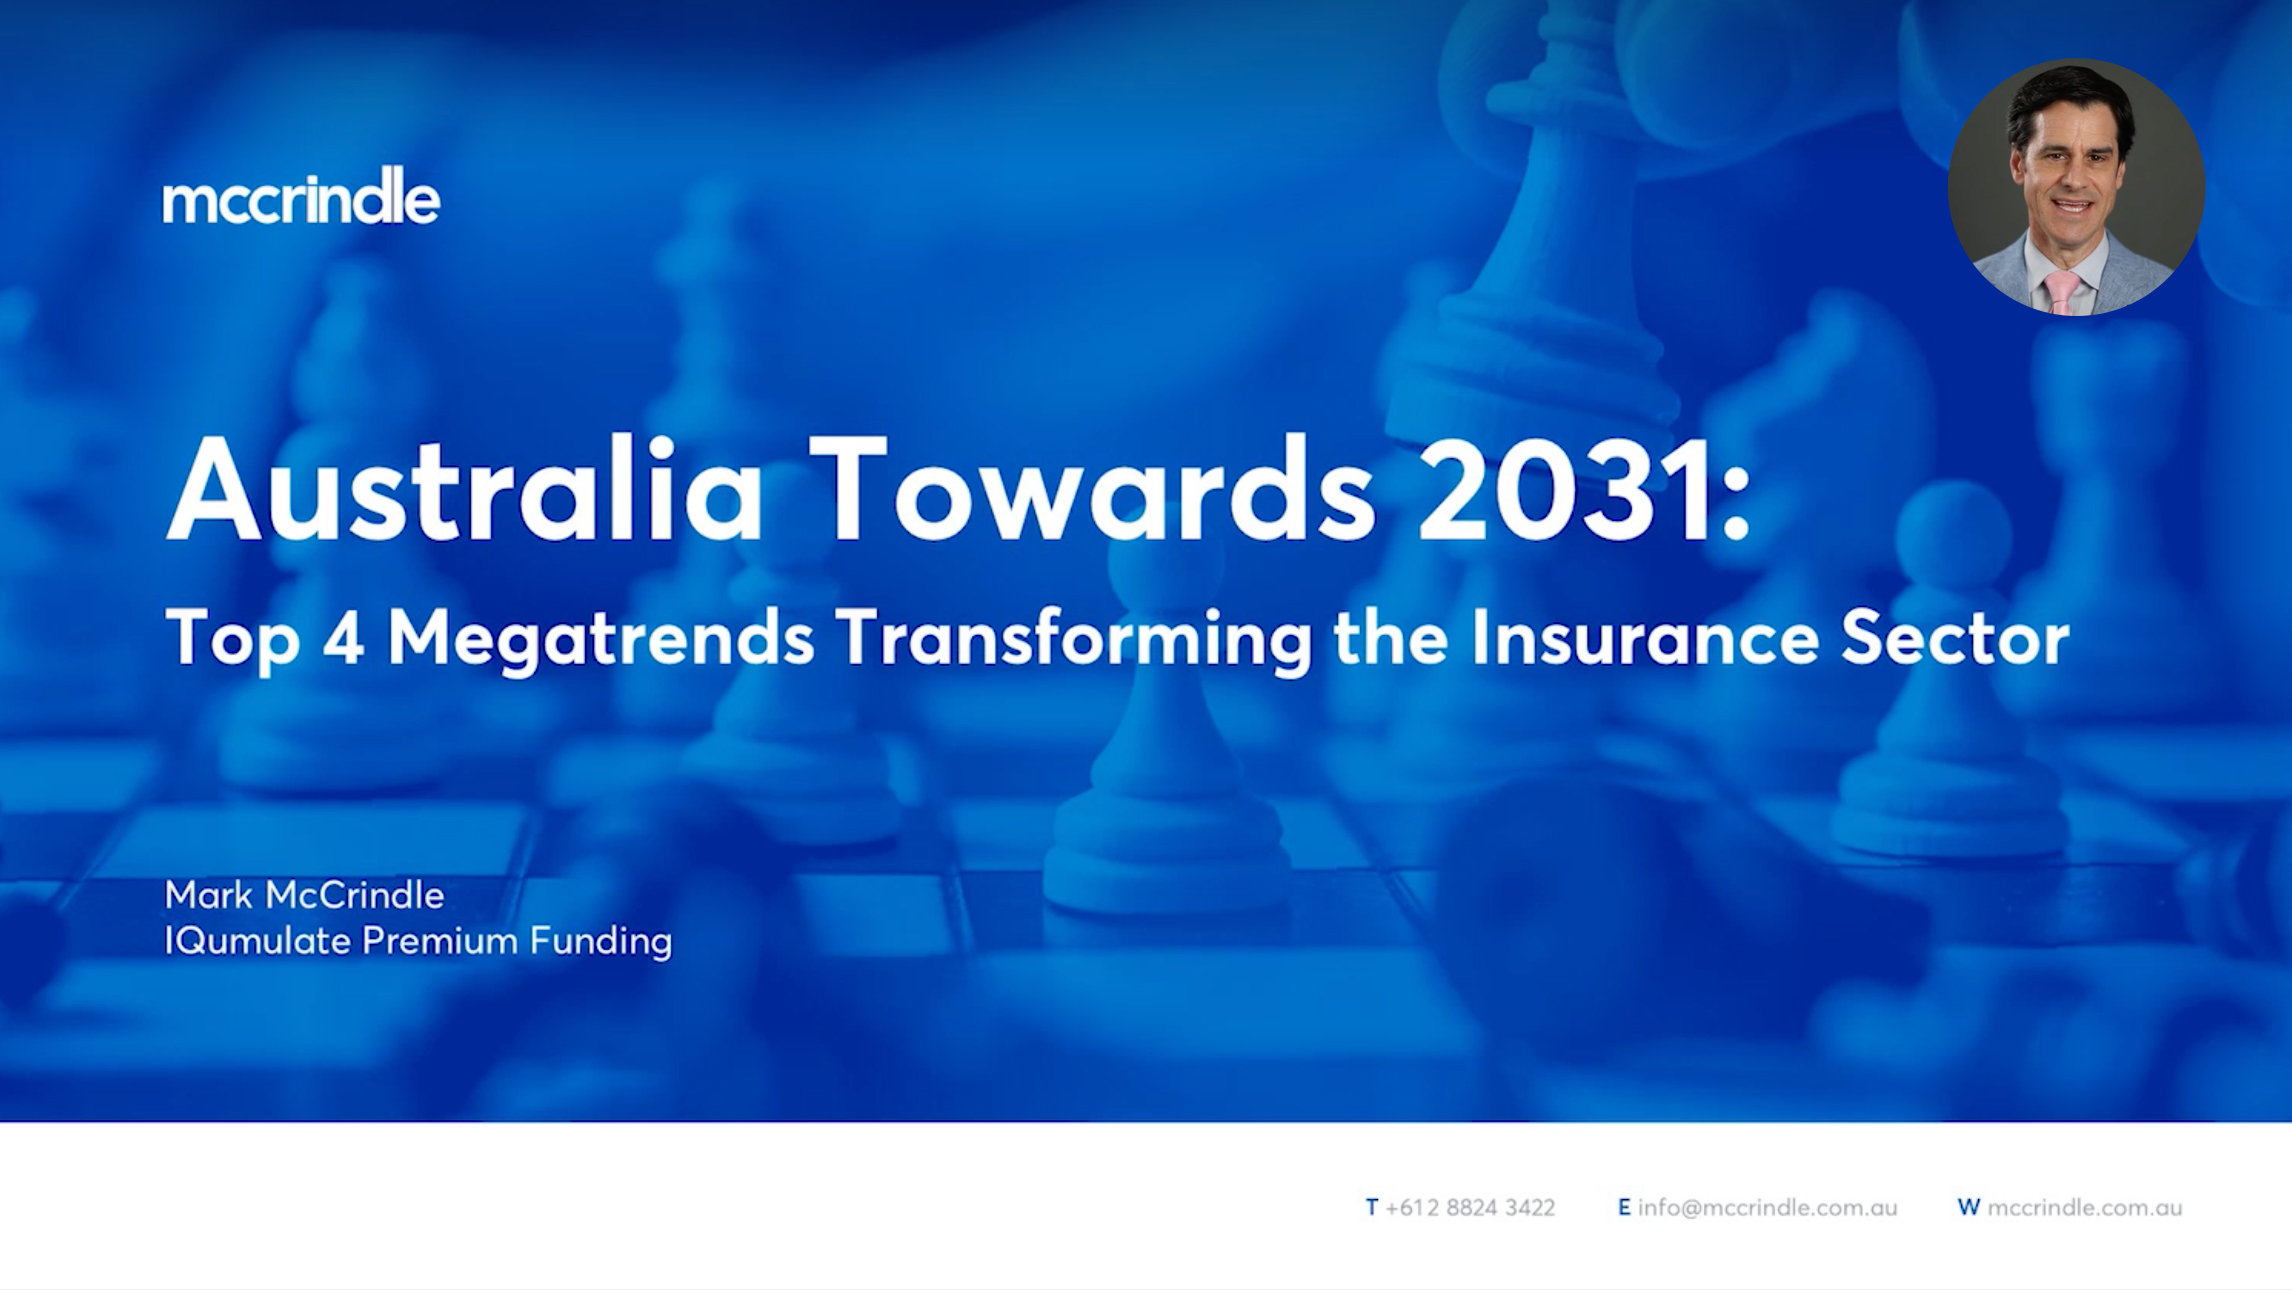 mccrindle Australia Towards 2031: Top 4 Megatrends Transforming the Insurance Sector. Mark McCrindle. IQumulate Premium Funding.